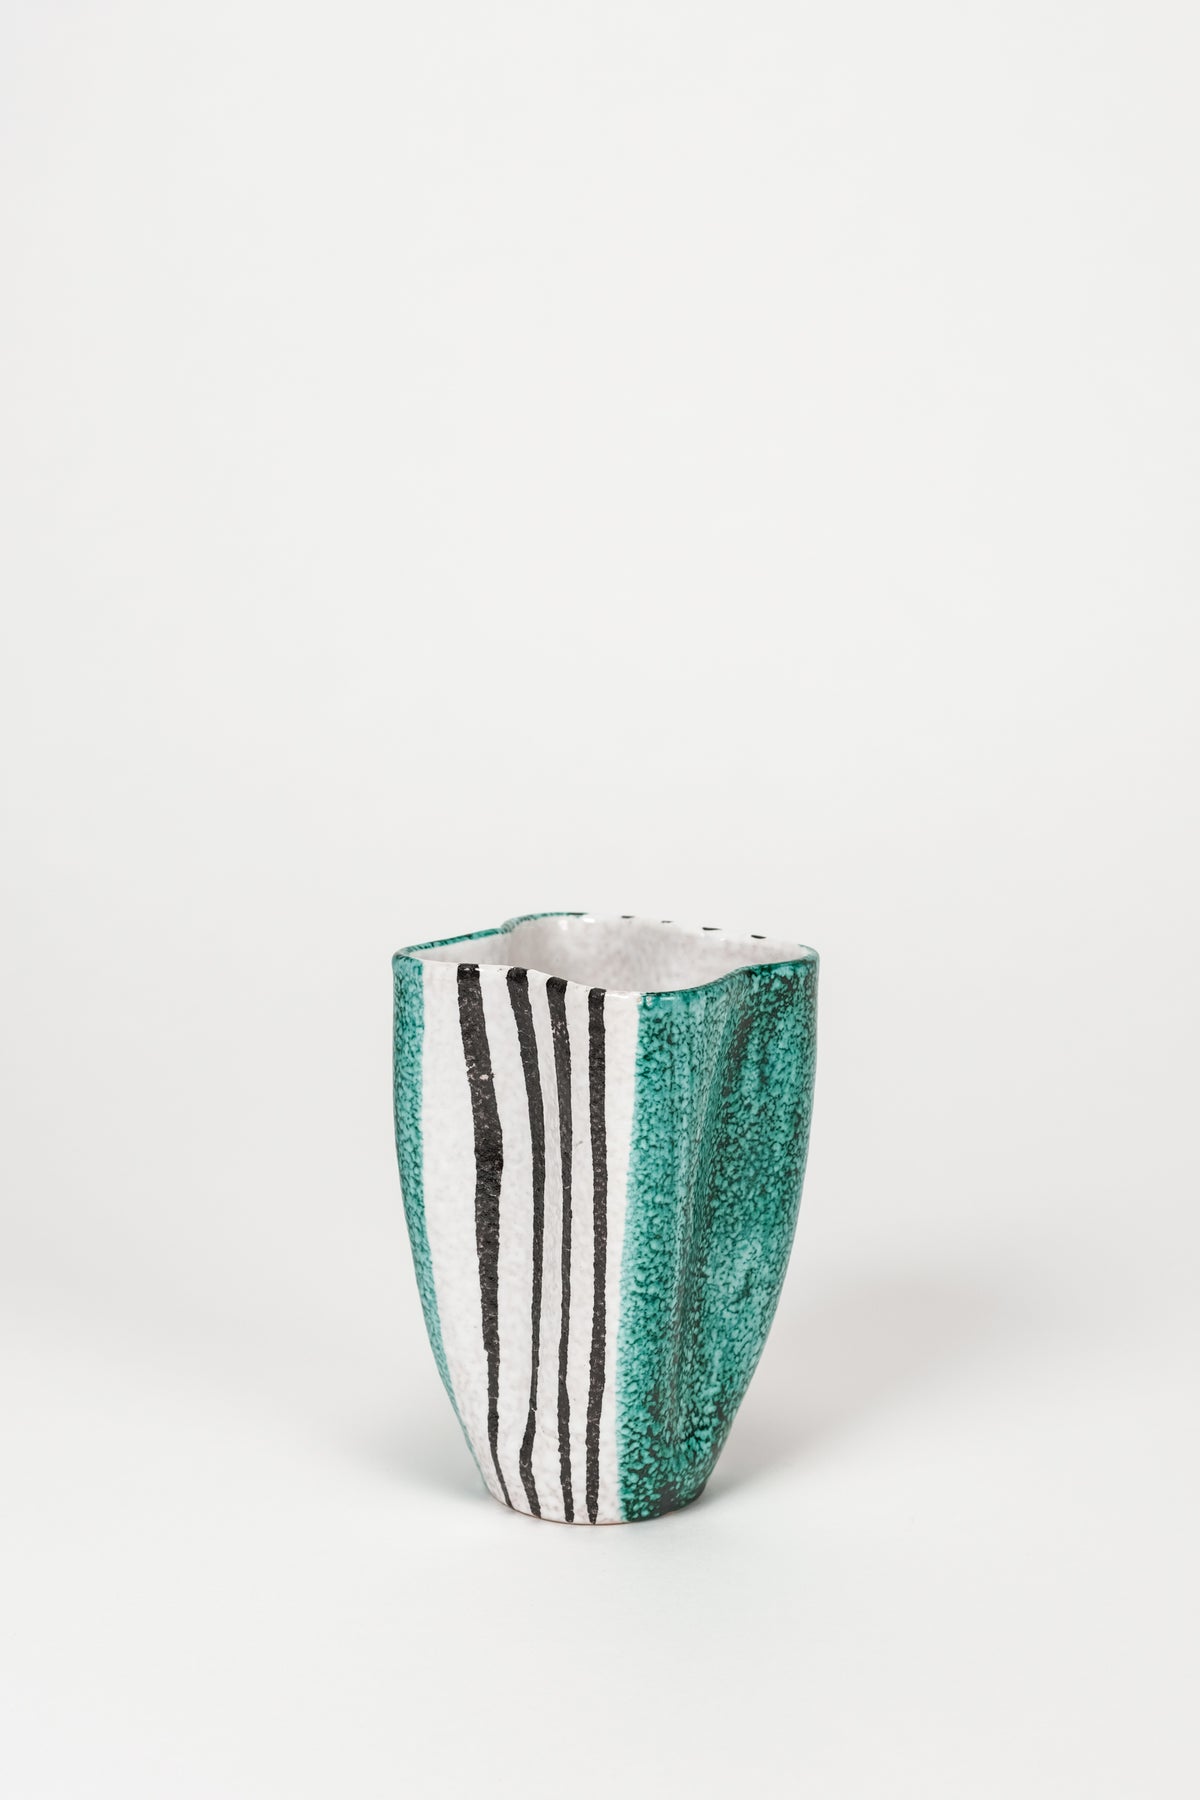 Alvino Bagni Vase, Keramik, 50er